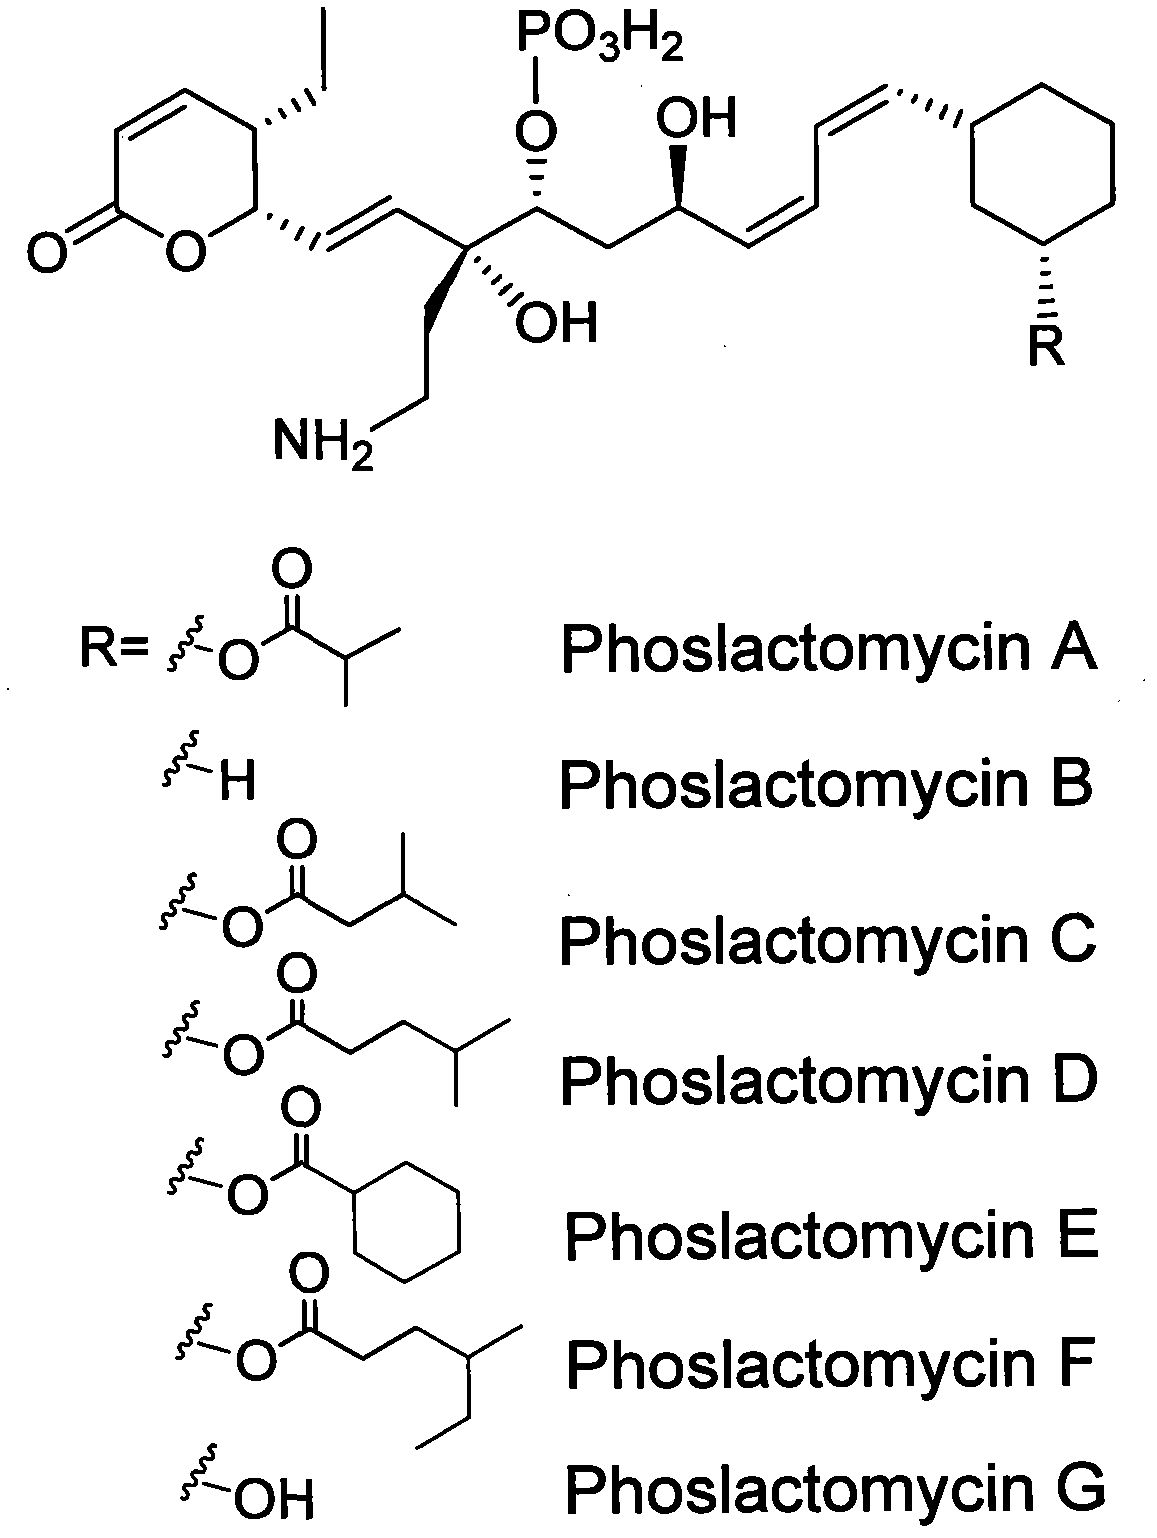 Biosynthetic gene cluster of phoslactomycins